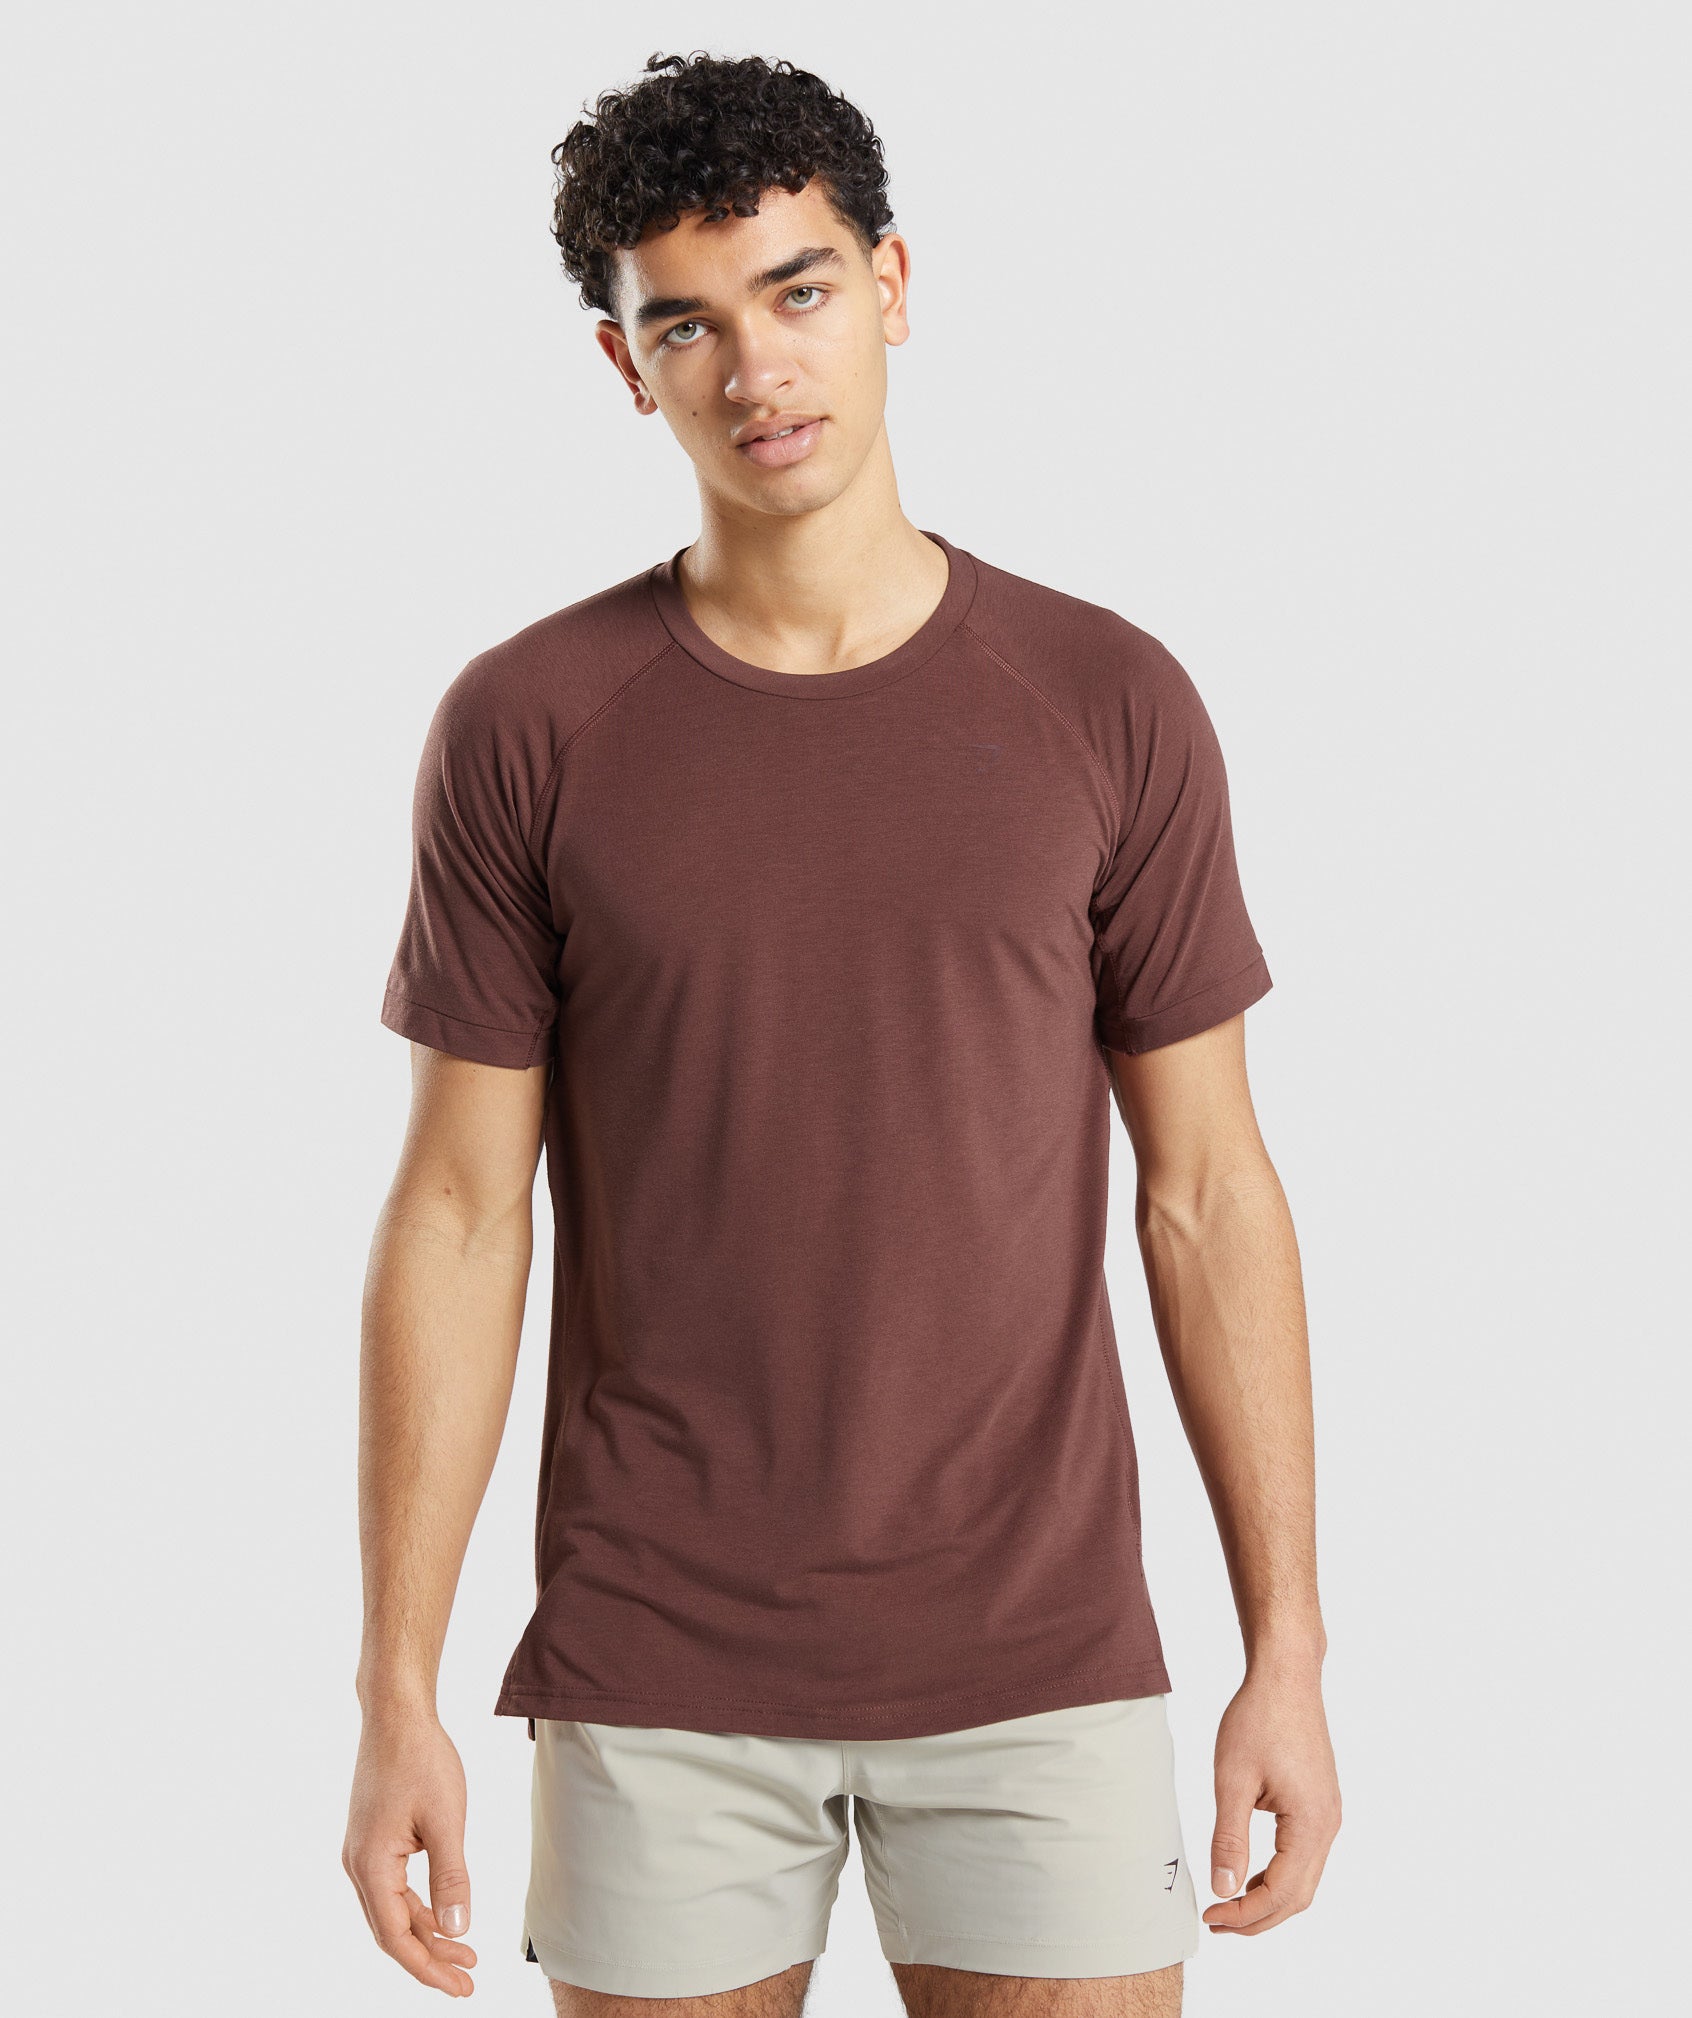 Gymshark Crest T-Shirt - Cherry Brown